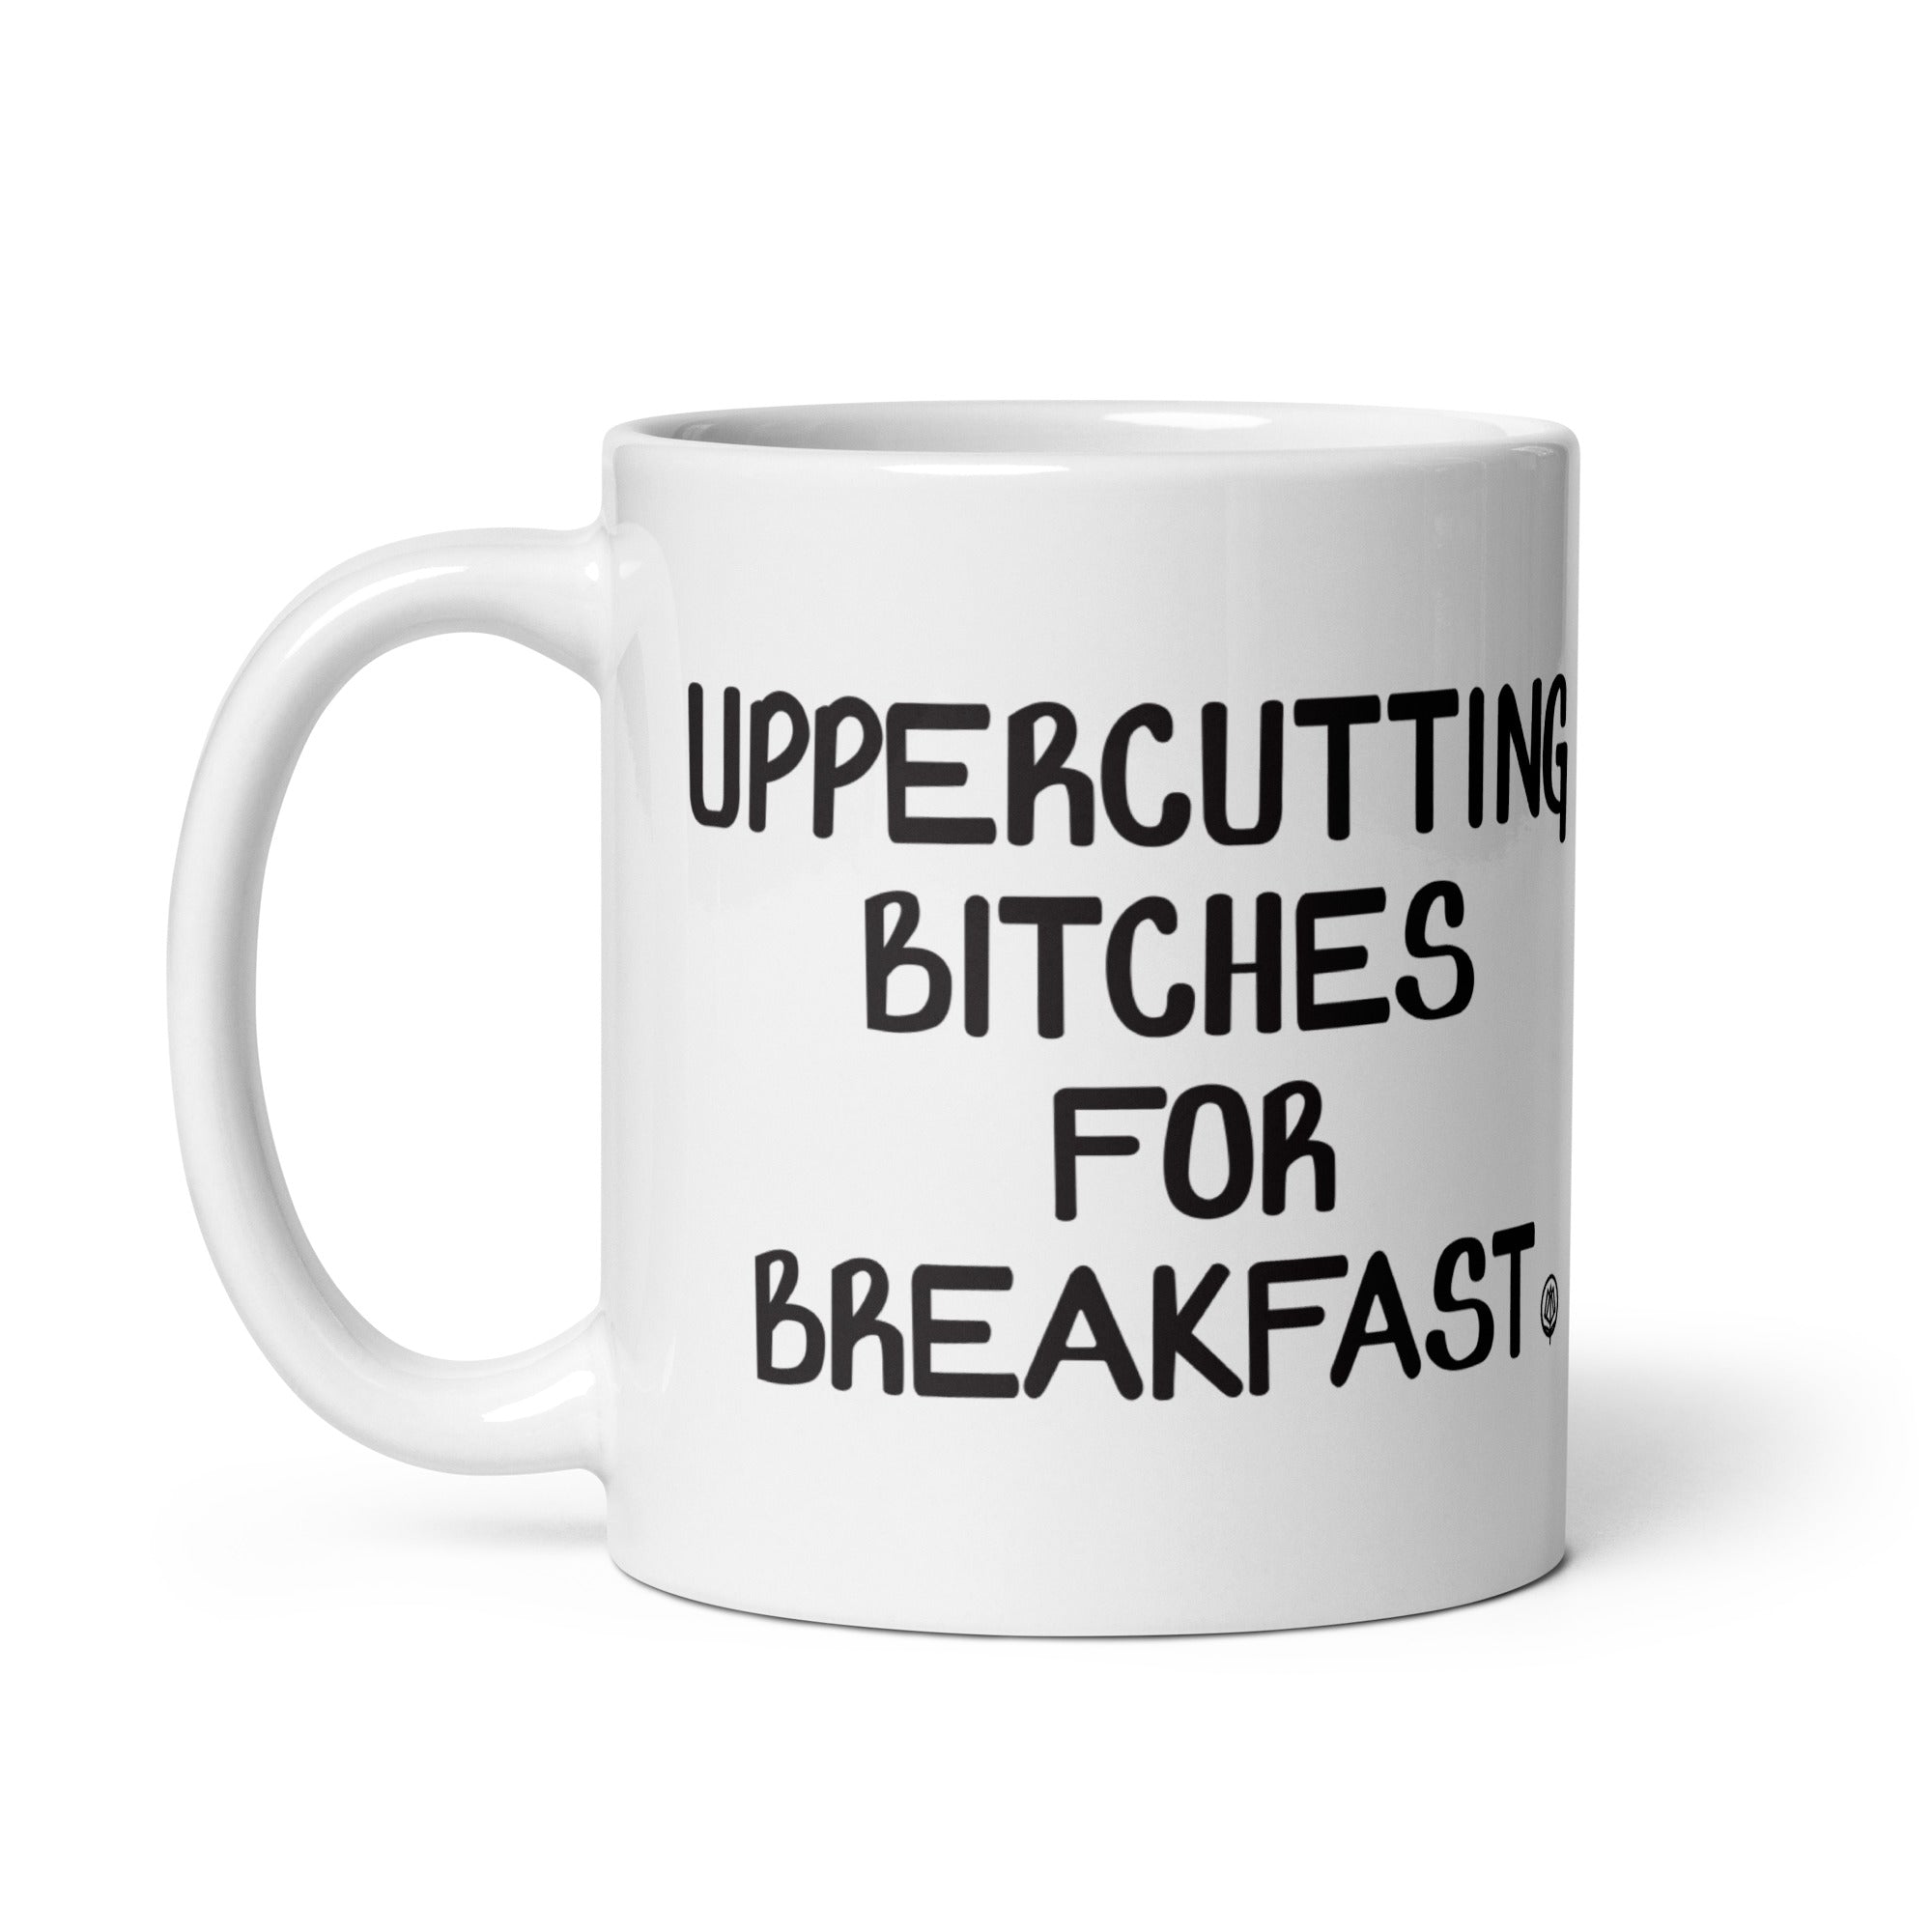 Uppercutting Mug - White